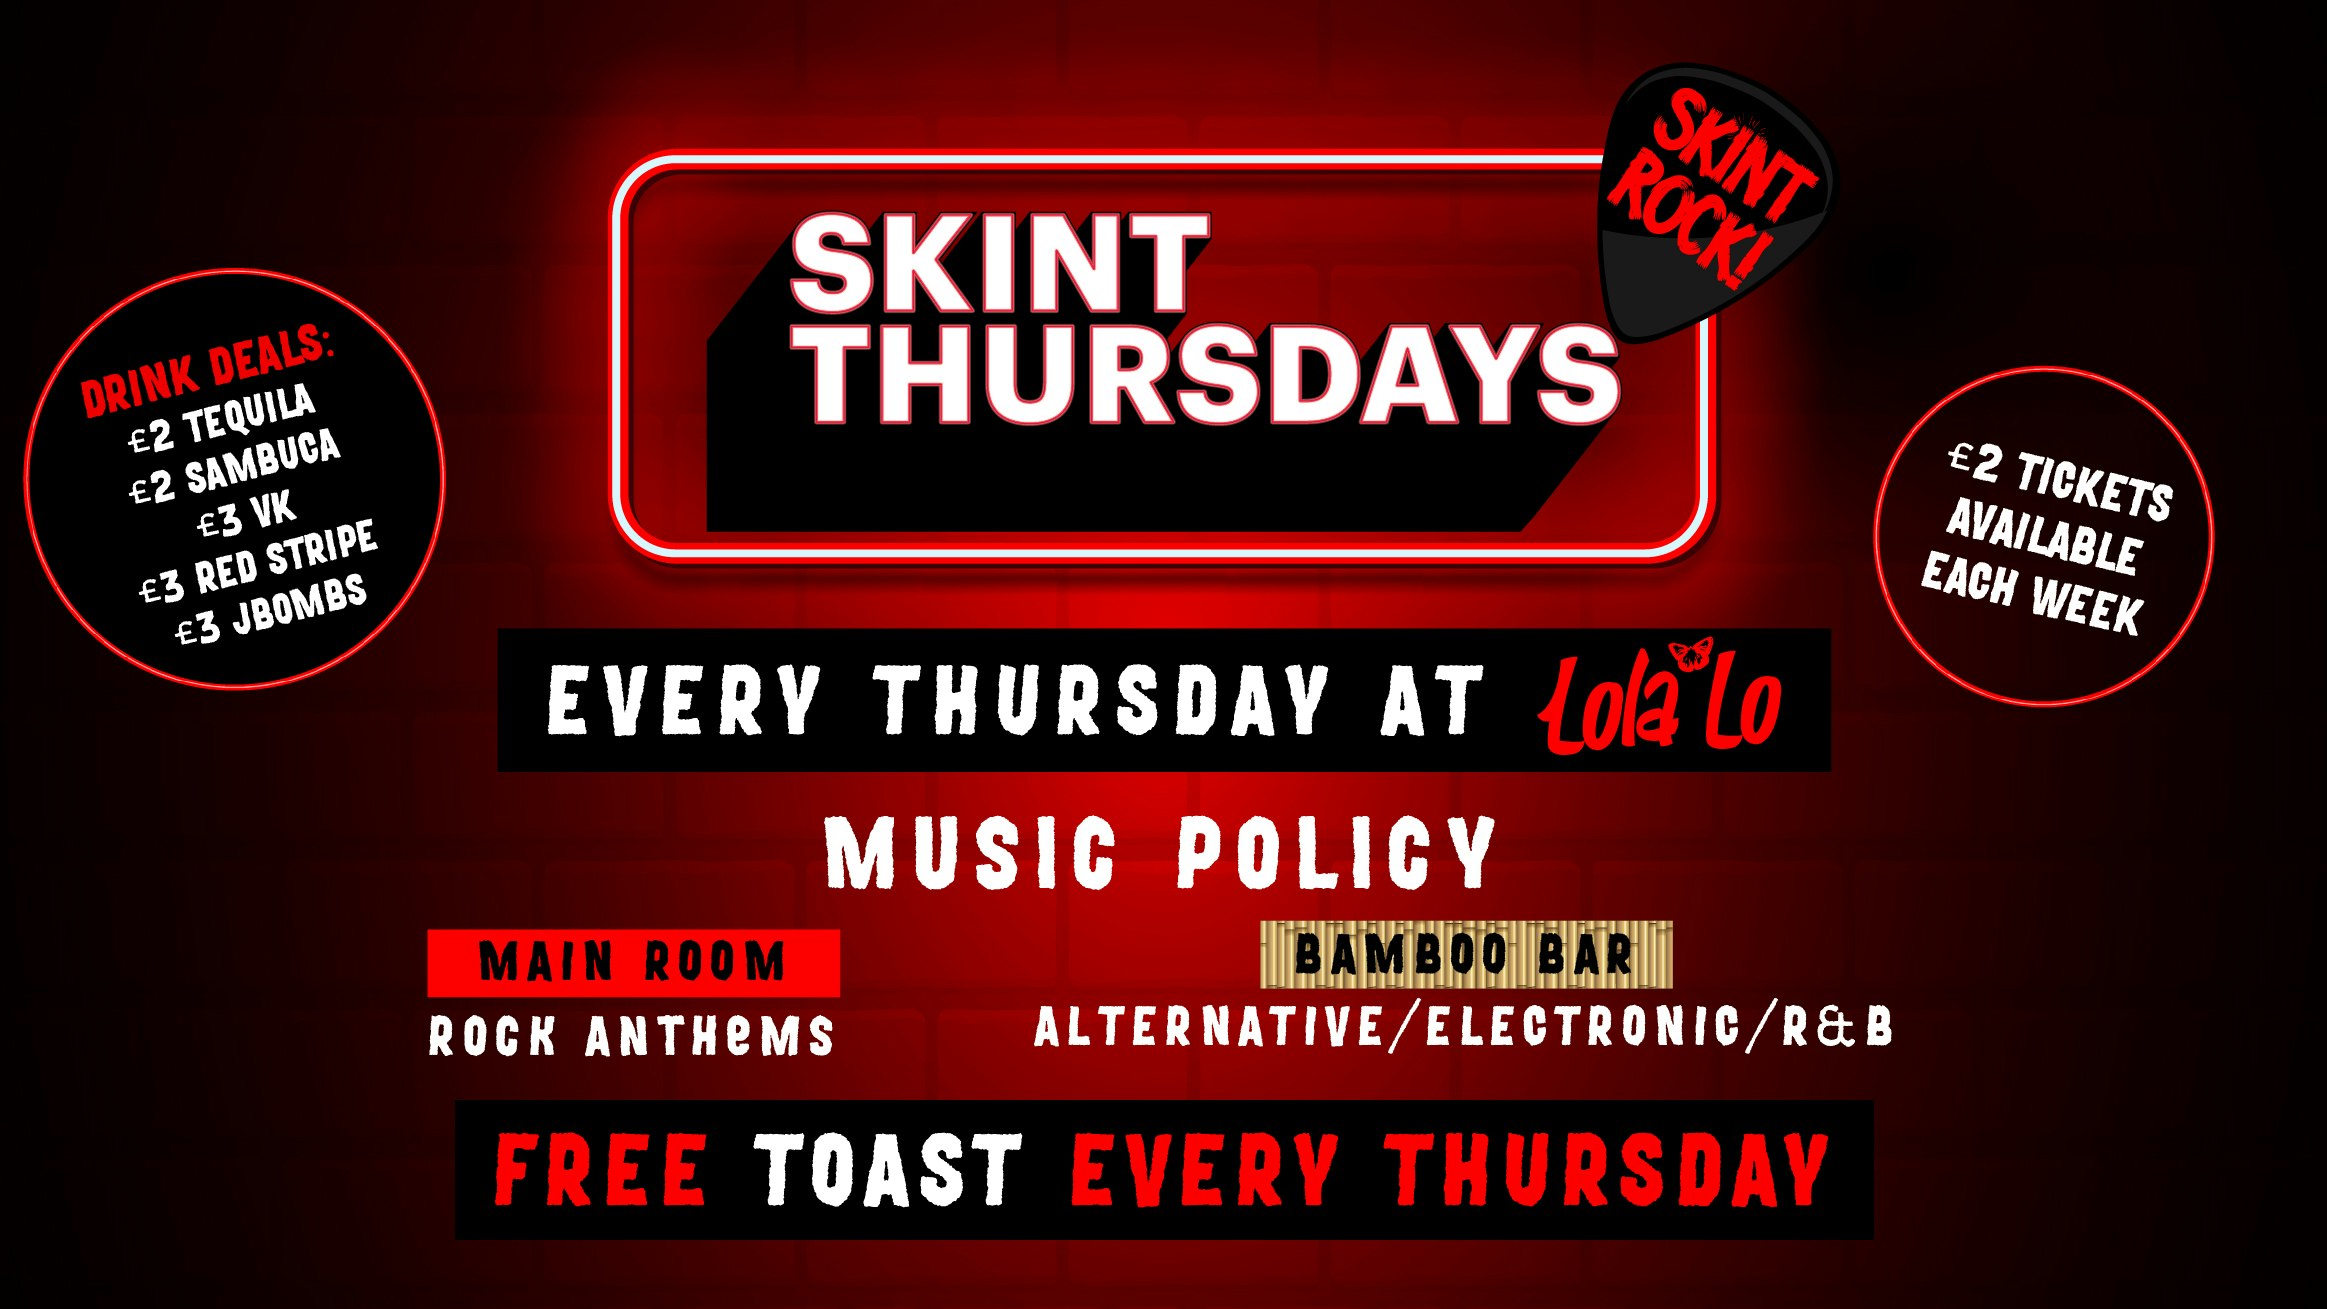 Skint Thursday – Free Toast